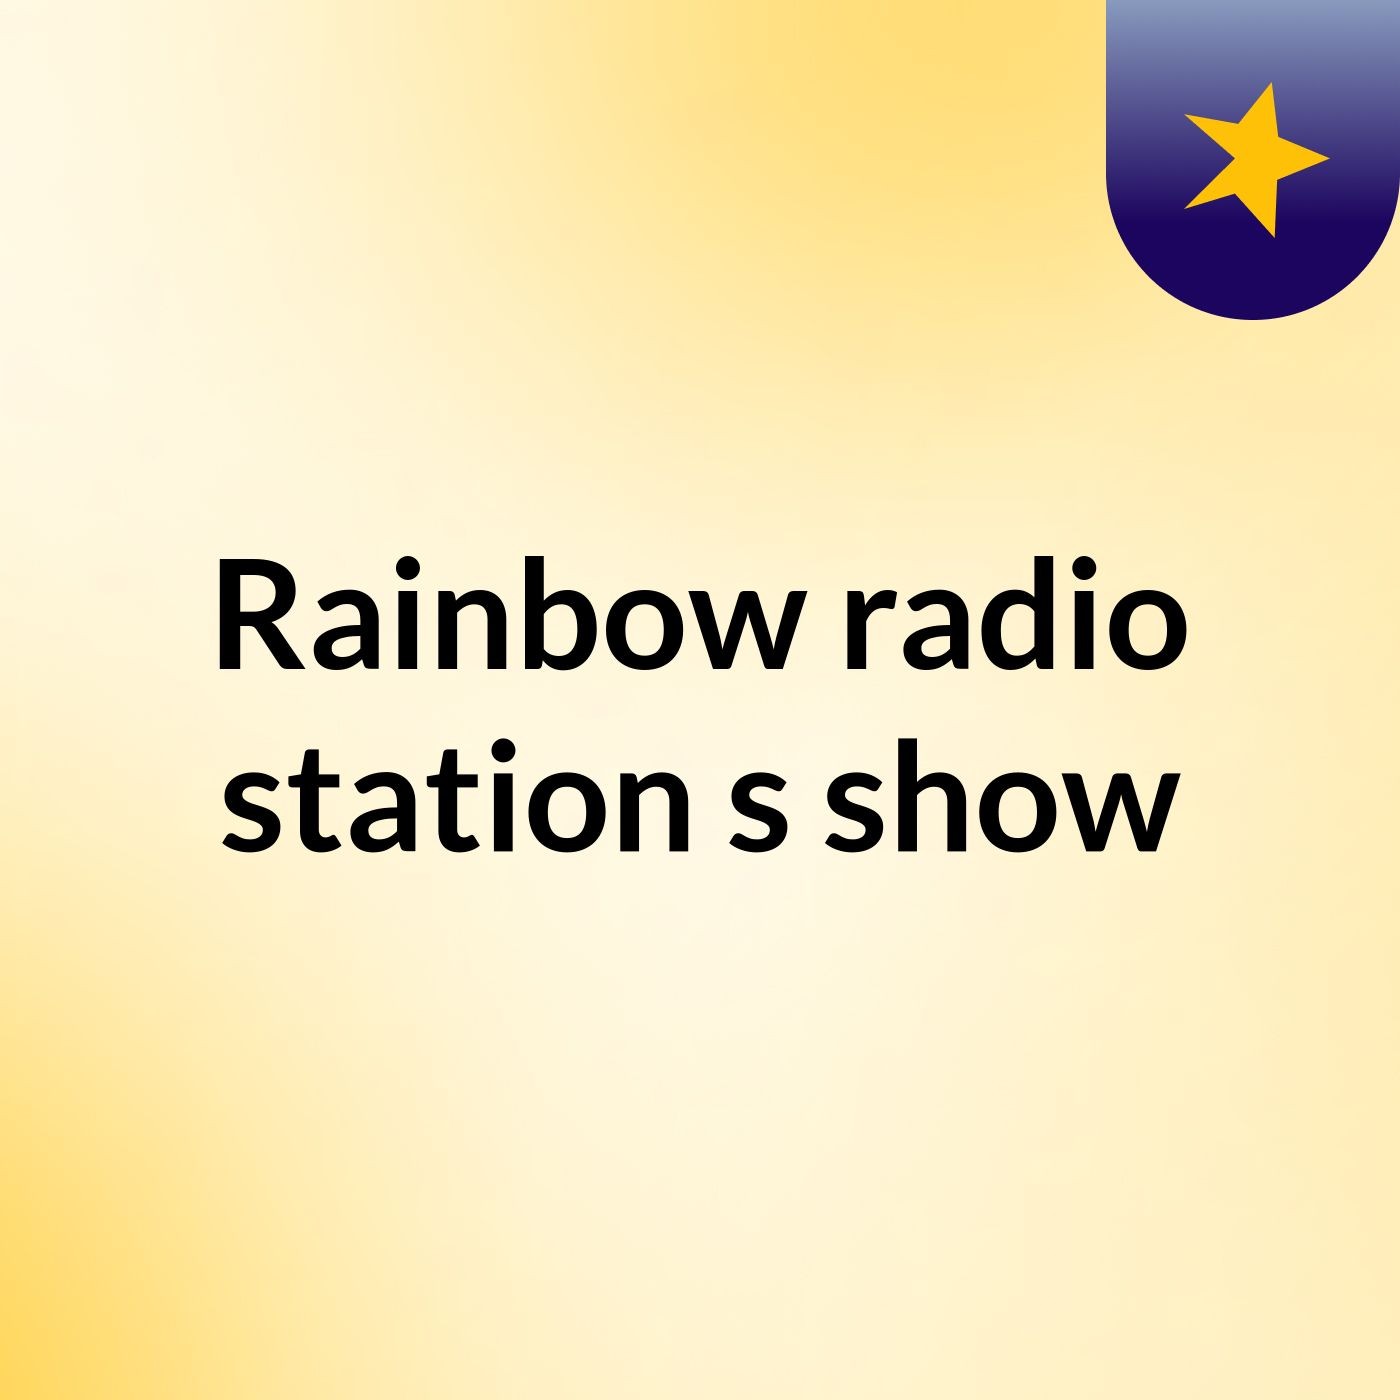 Rainbow radio station's show